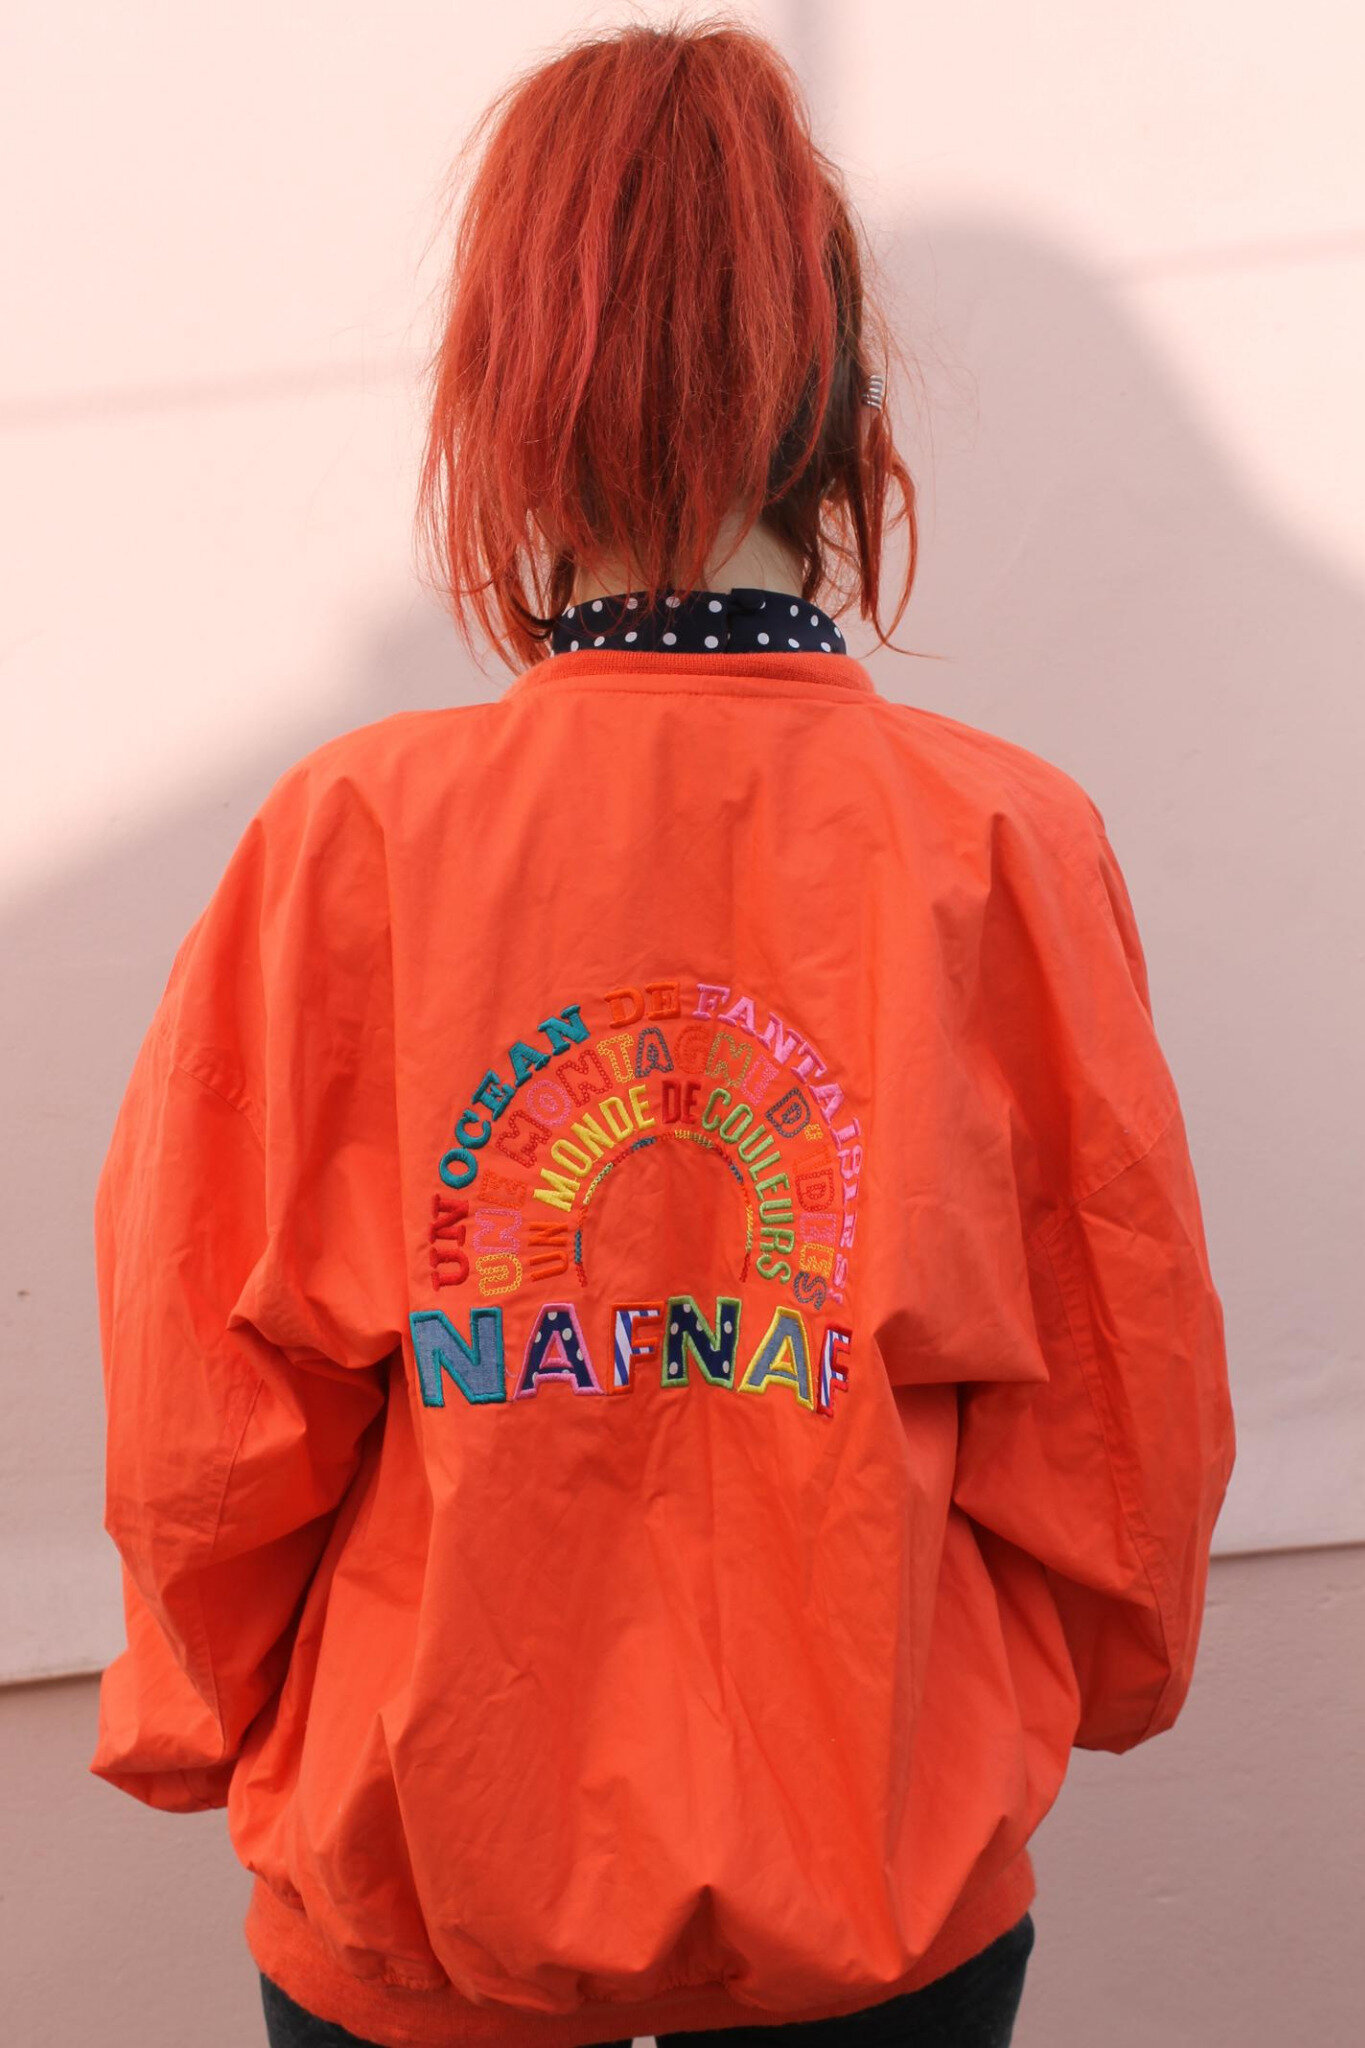 atlántico brindis Rango Sweet Sorrow Vintage on Twitter: "NEW Early 1990s NAF NAF Orange Bomber  Jacket £35.00 #Vintage #ASOS #1990s #NafNaf https://t.co/ELLVLVpRQN  http://t.co/t2SXqlZT2m" / Twitter